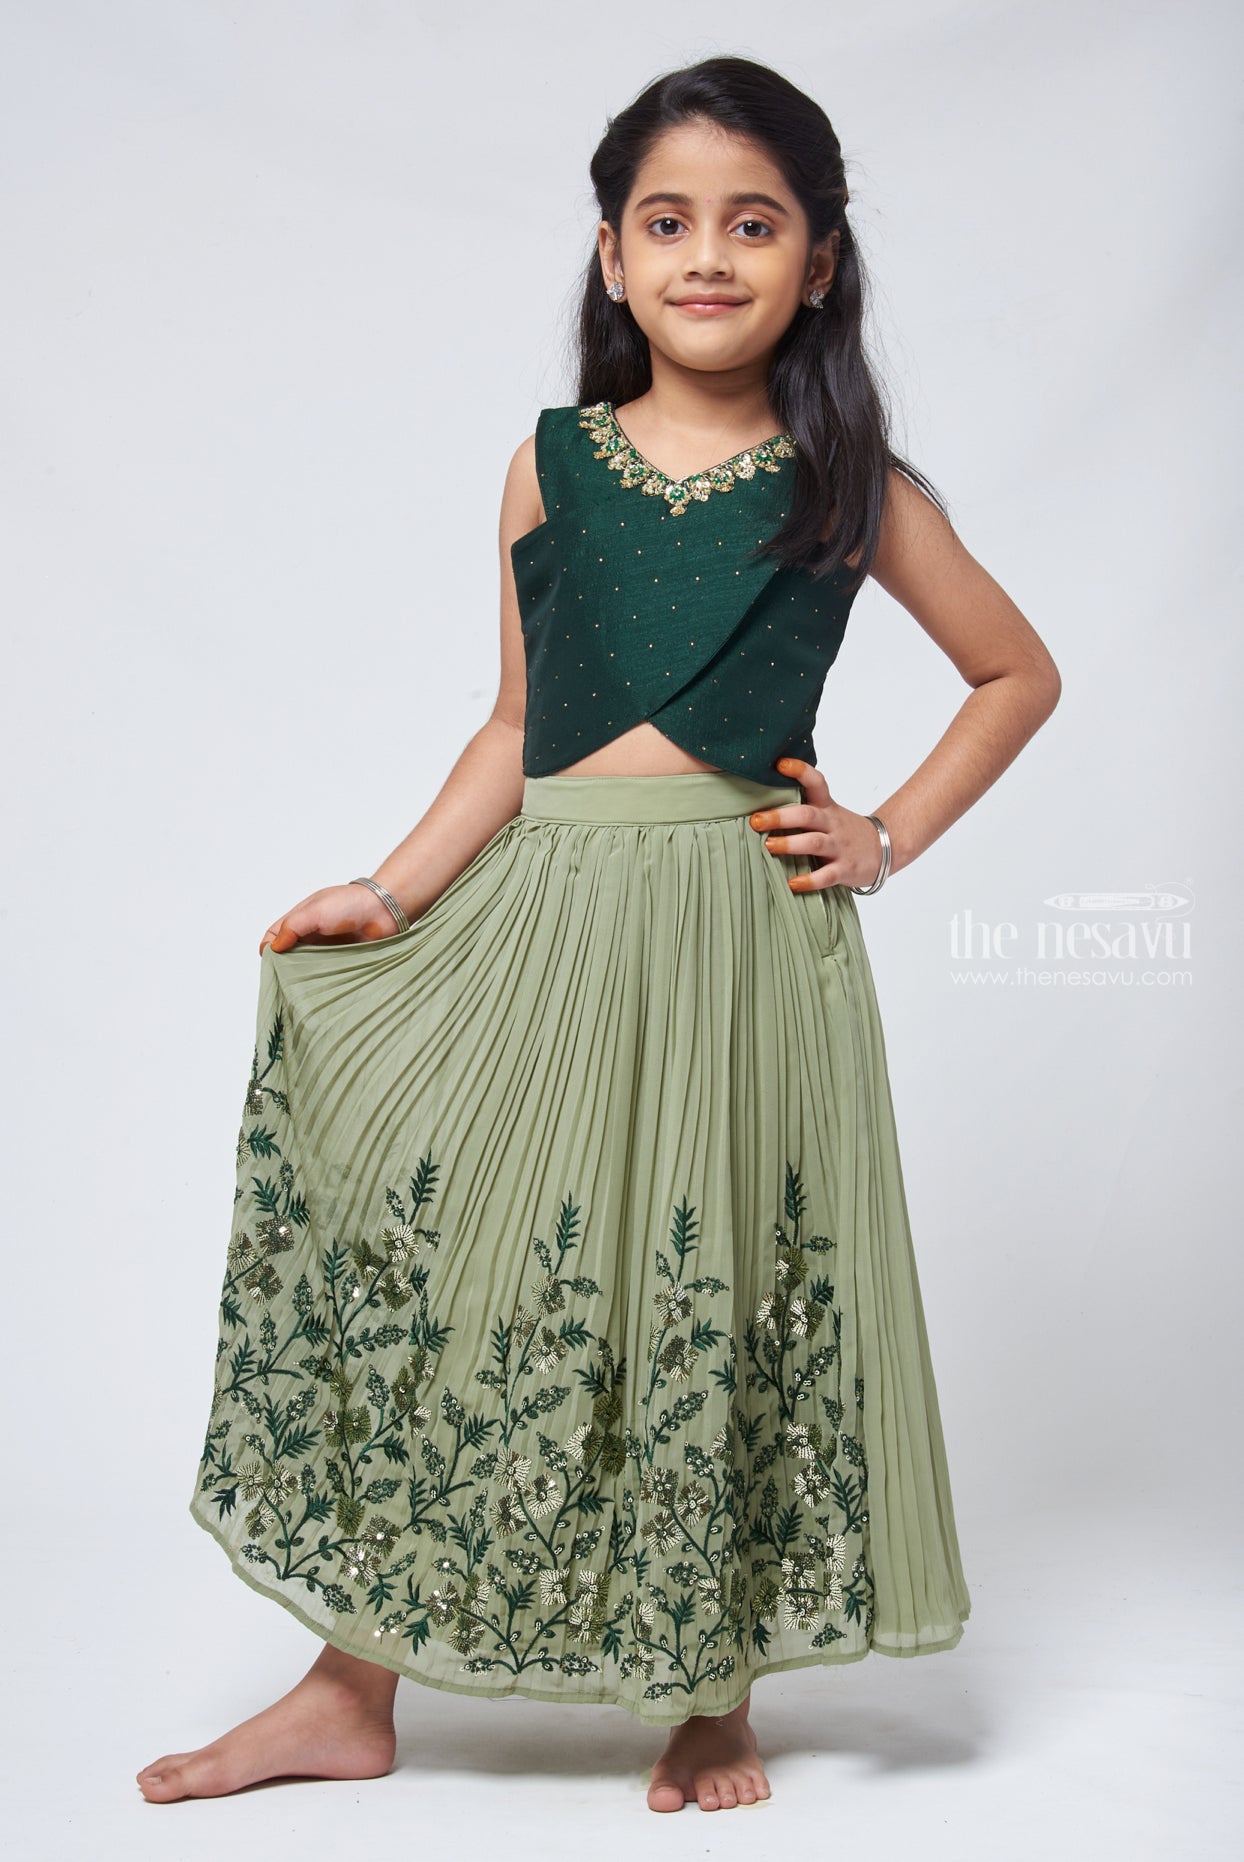 Stunning Red and Green Designer Lehenga Choli for Girls